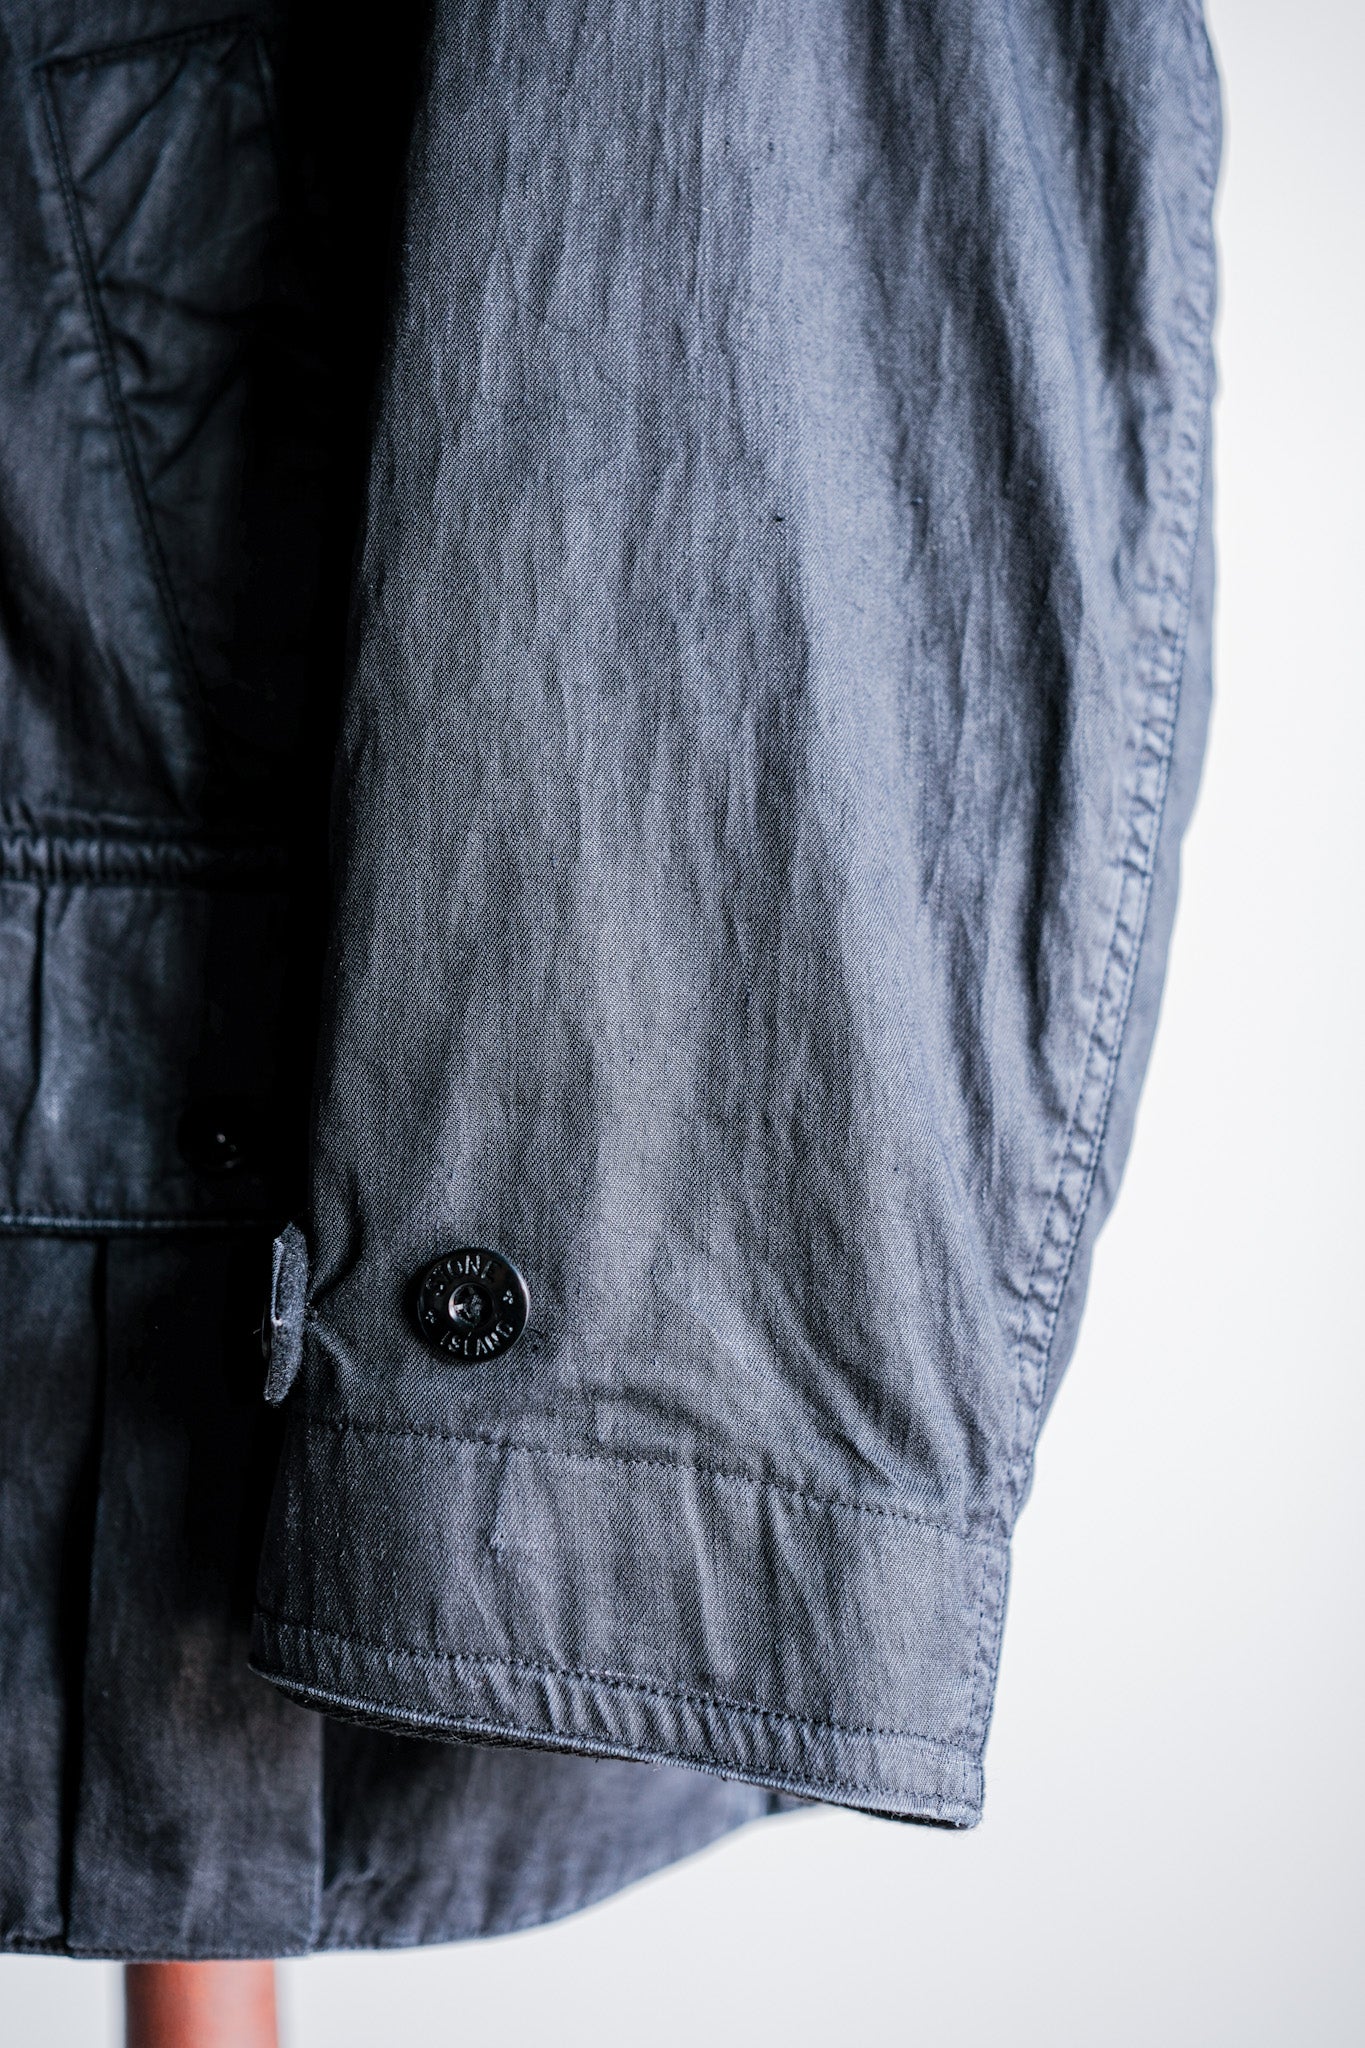 [06AW] Old Stone Island Garment 염색 된 리노 아마 네덜란드 로프 재킷 크기 .m